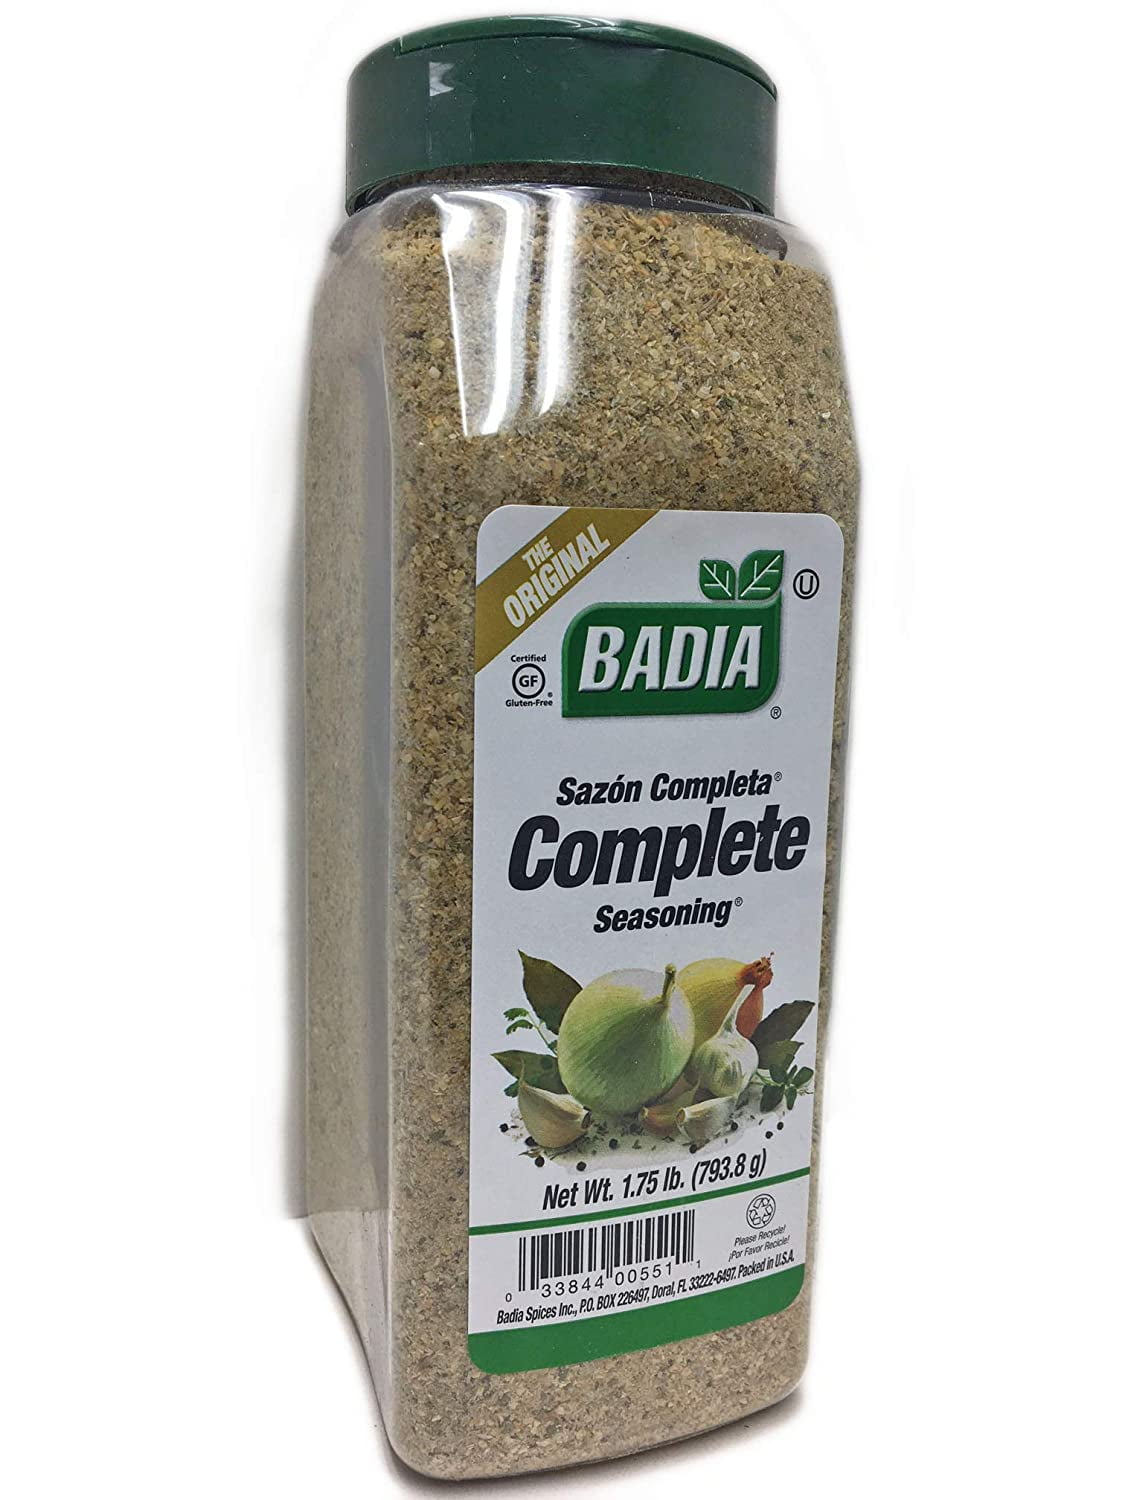 Badia Complete Seasoning, 35 Pound